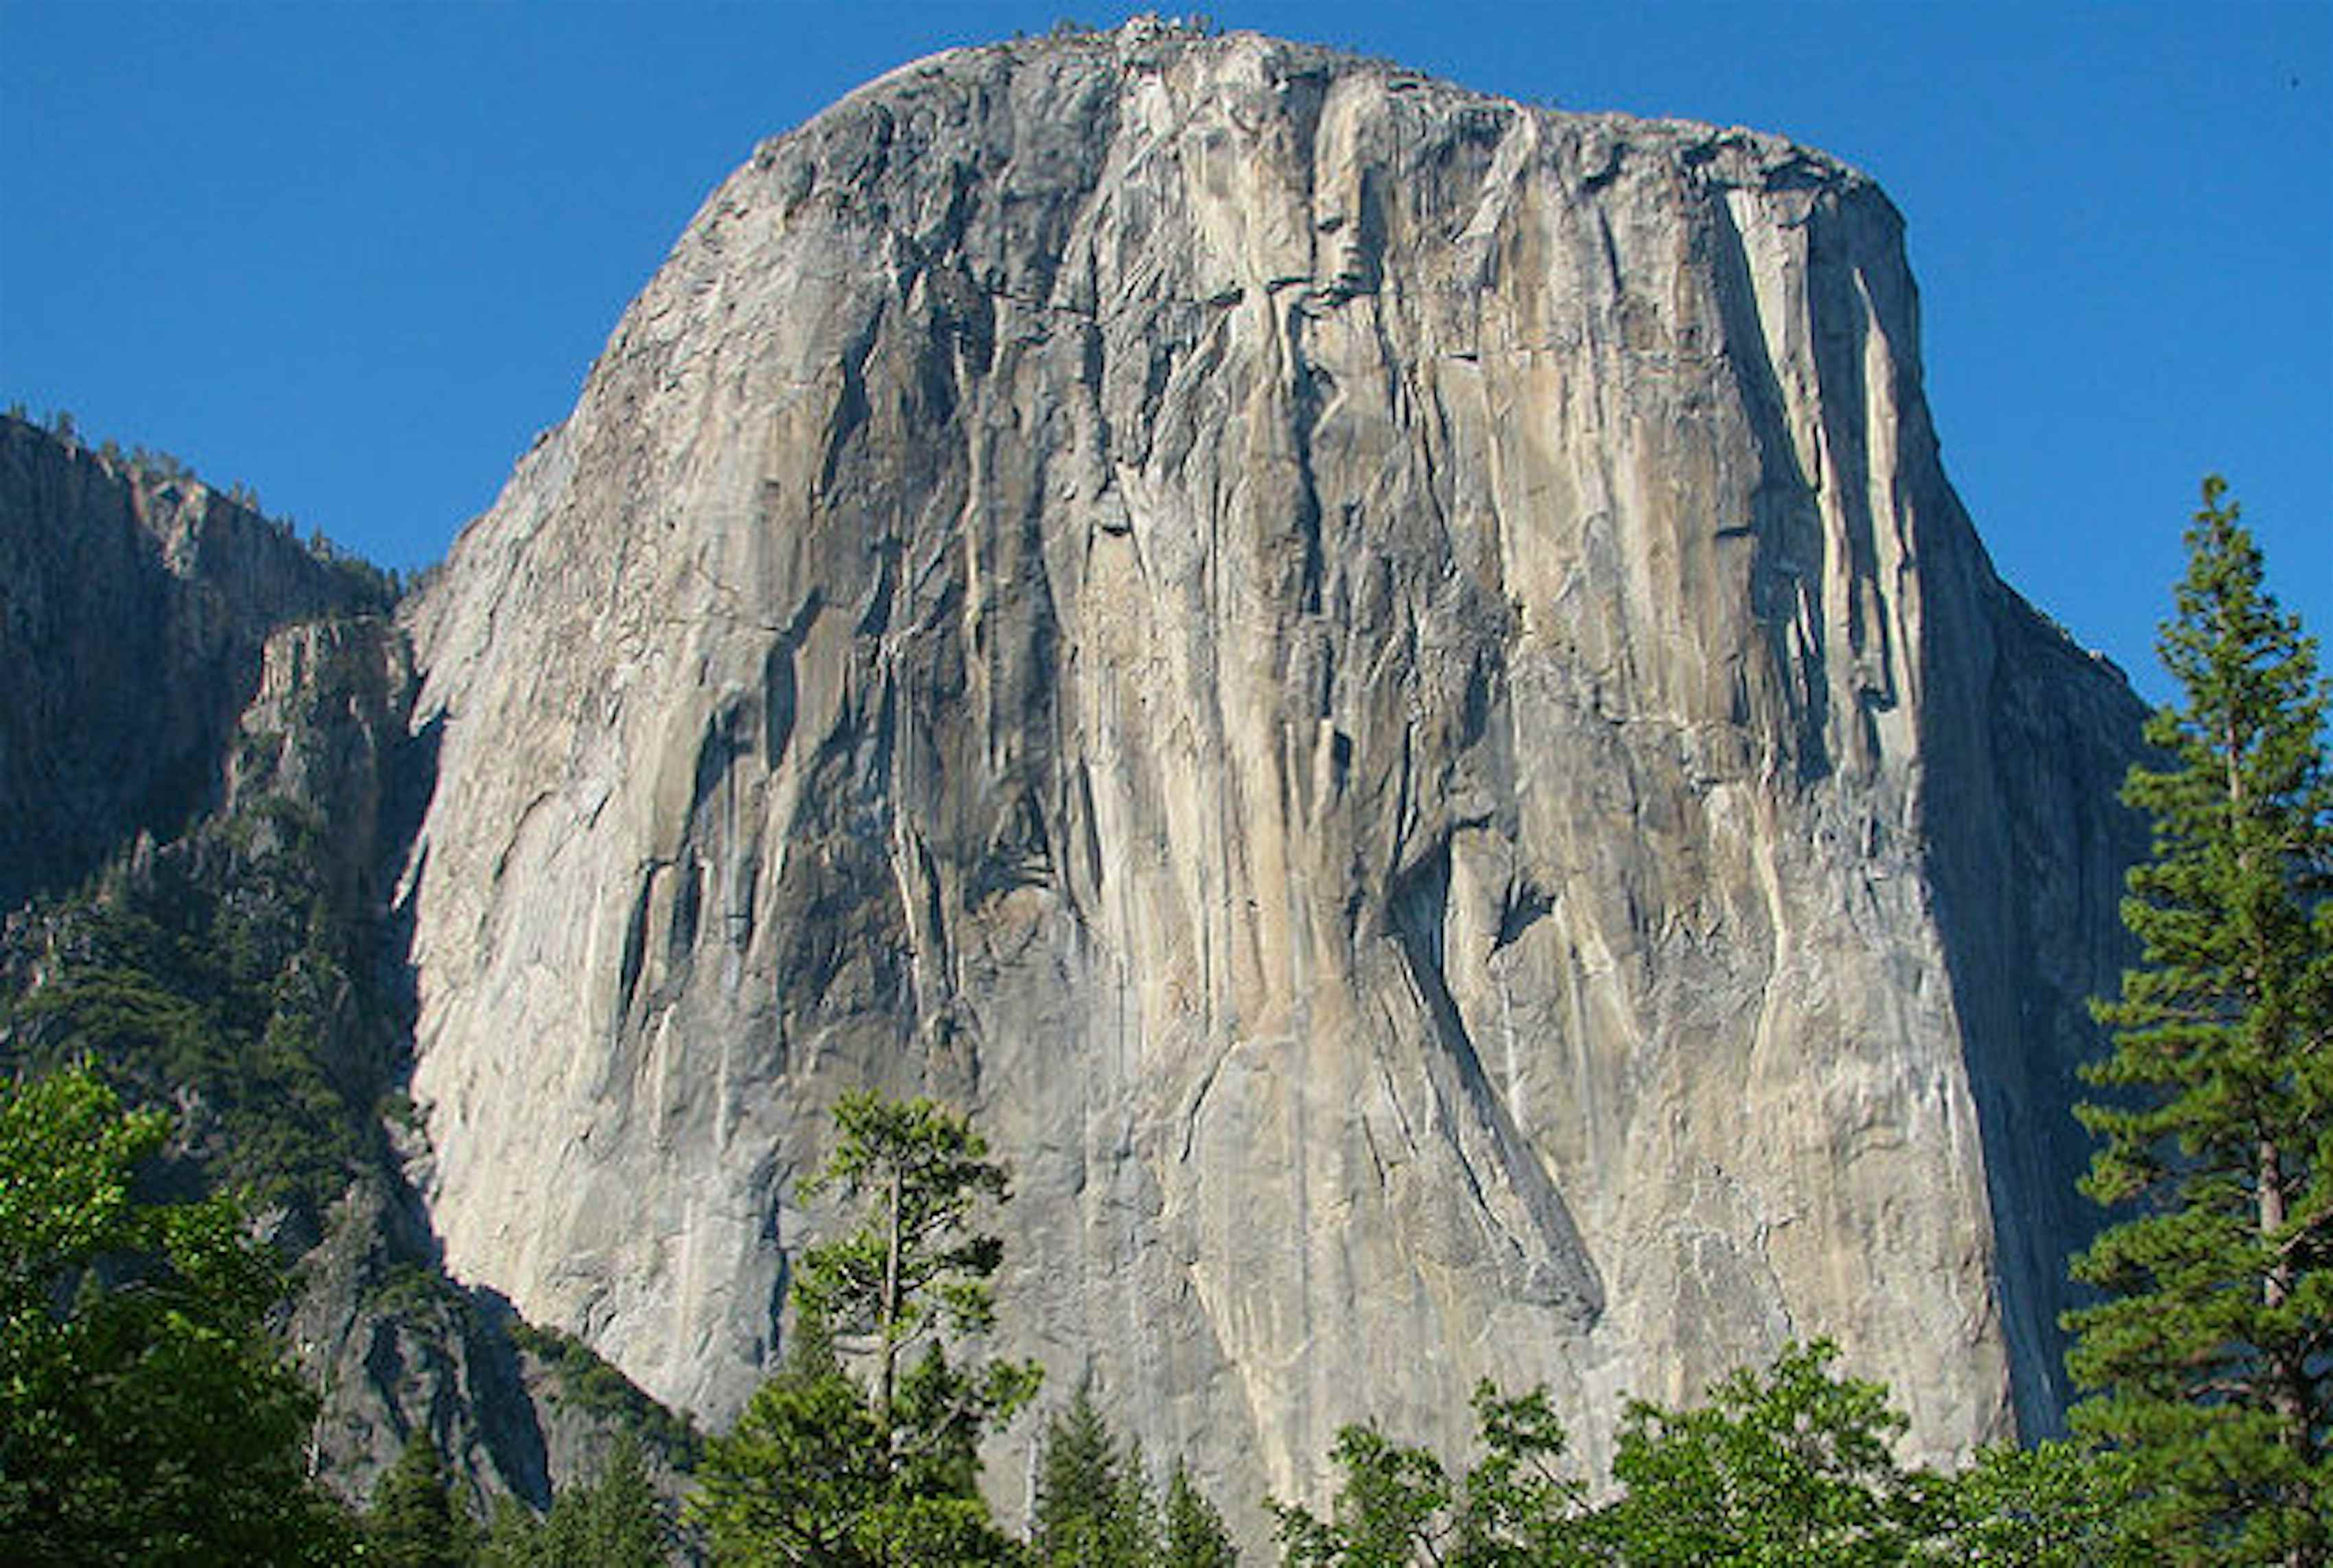 Americans complete world's hardest rock climb on Yosemite's El Capitan